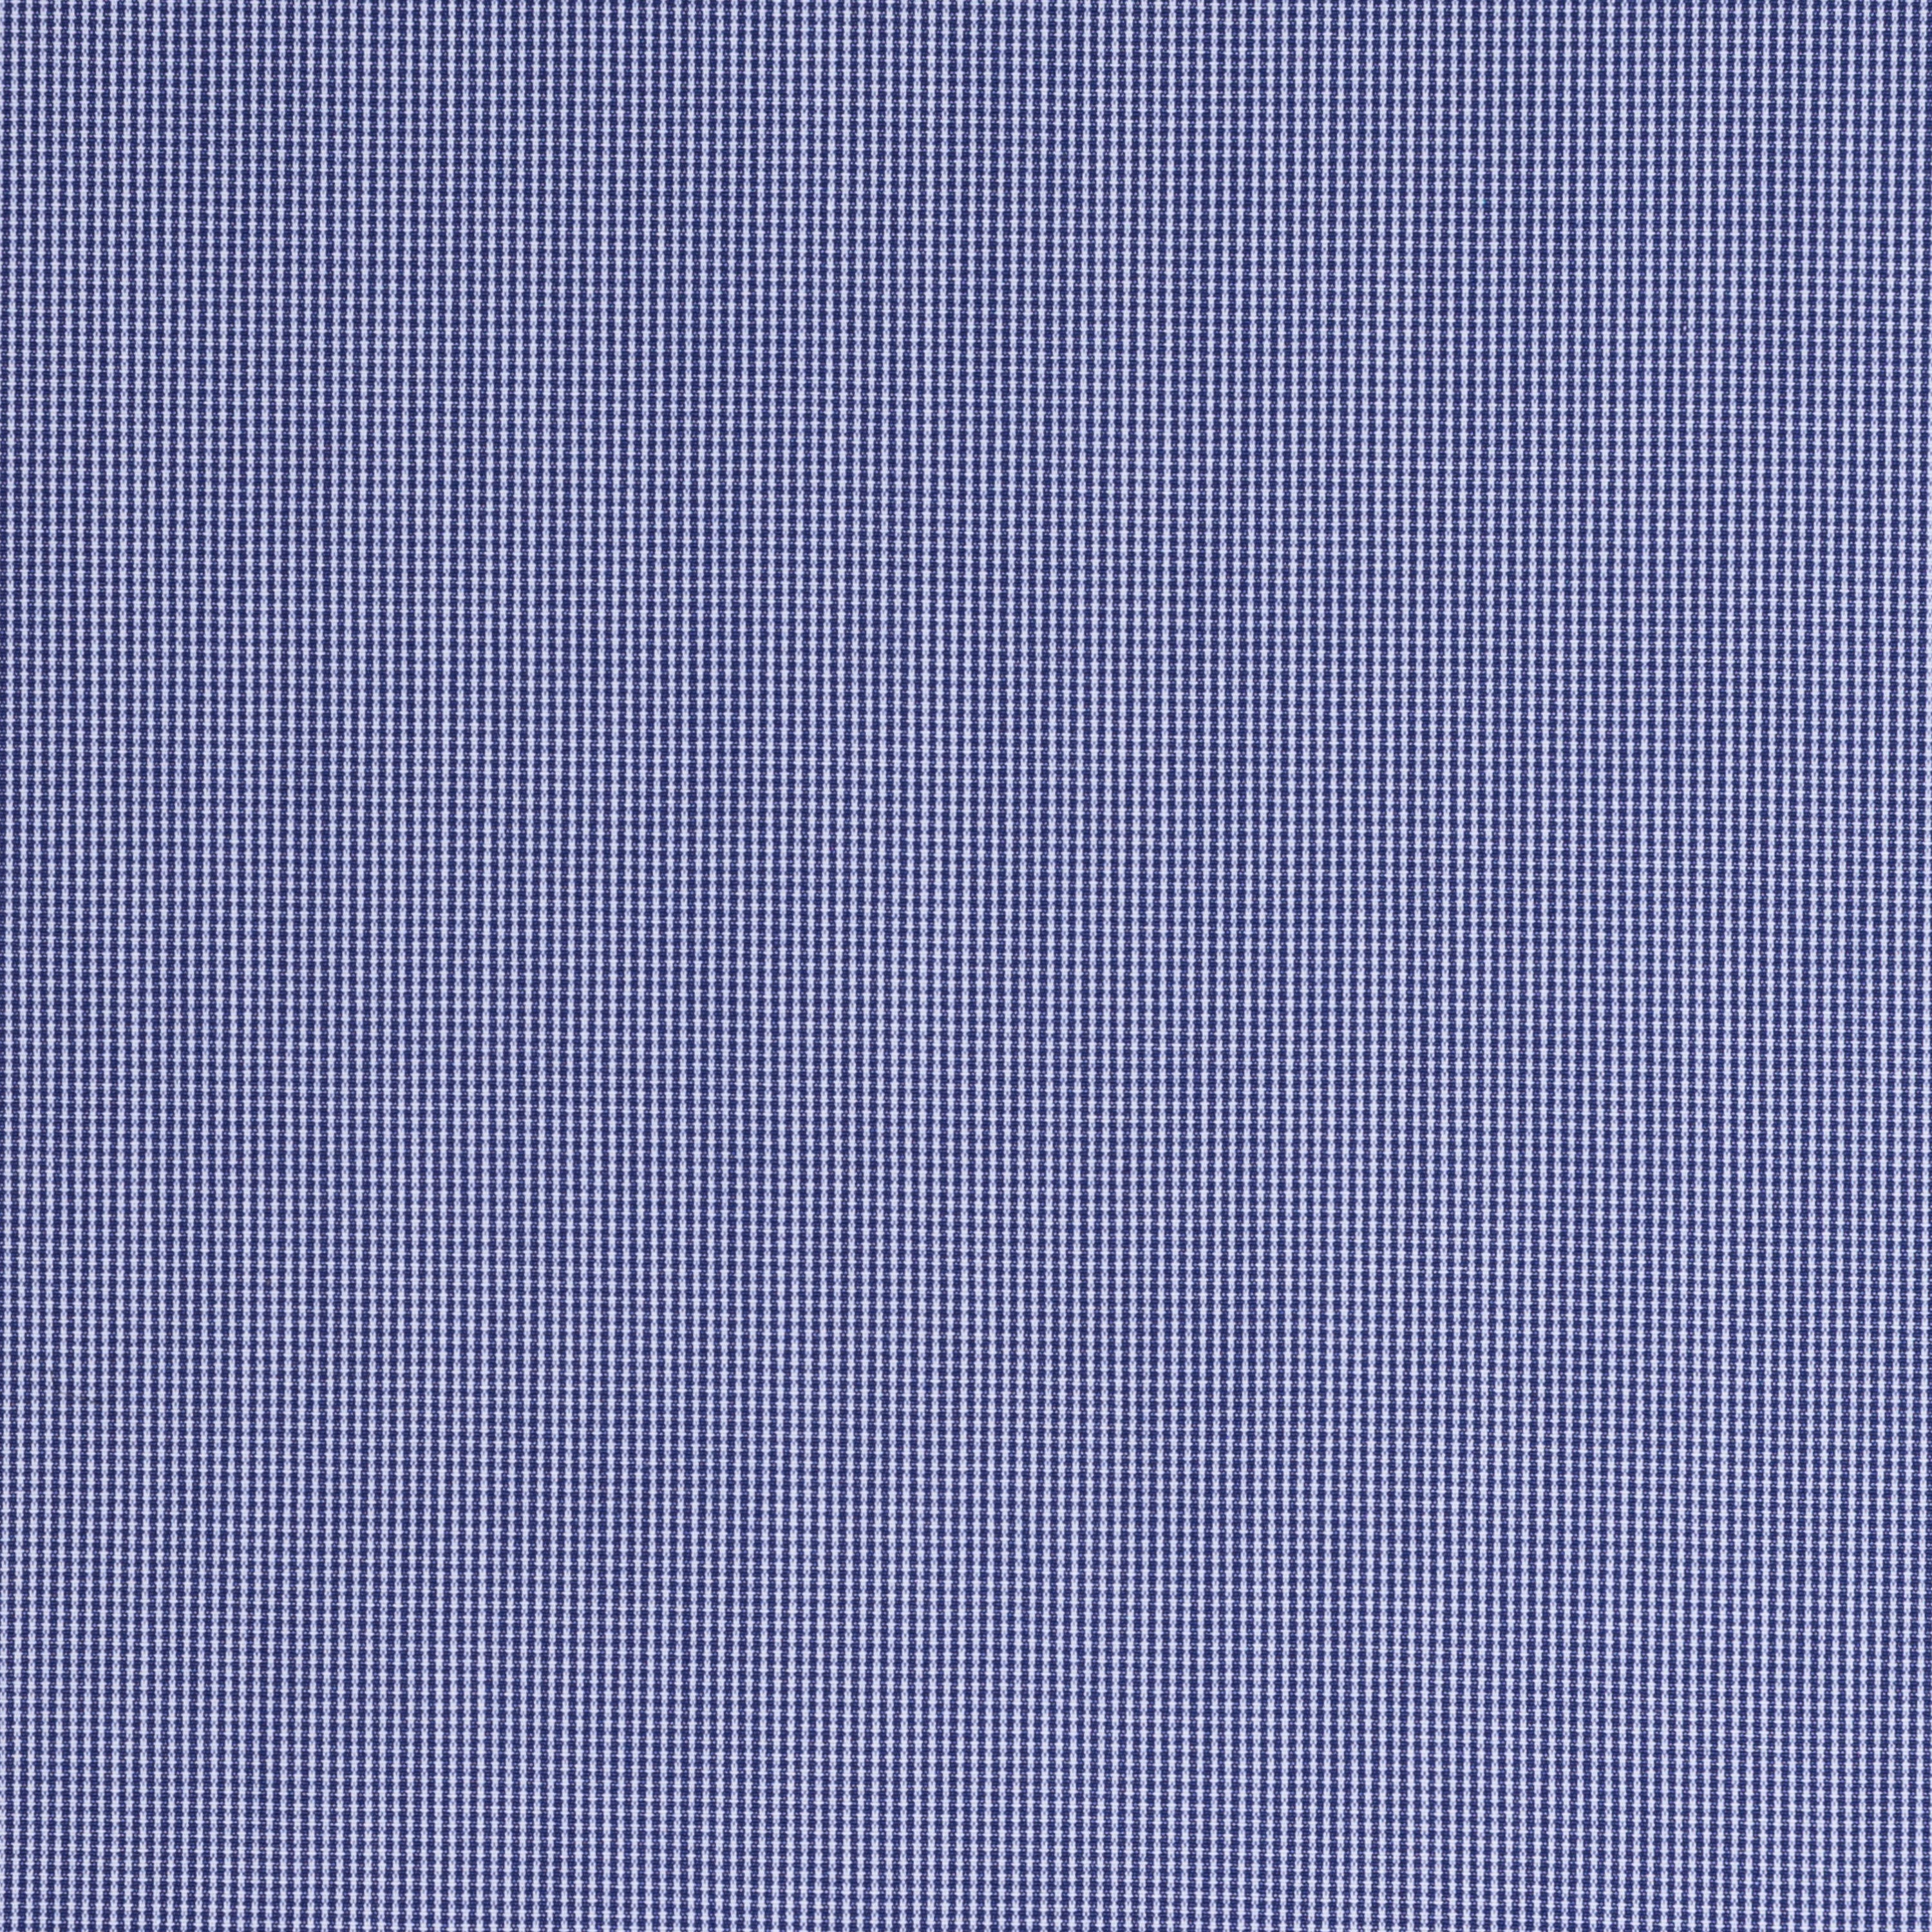 BESPOKE ATHENS Handmade Blue Patterned Cotton Dress Shirt EU 41 NEW US 16 BESPOKE ATHENS